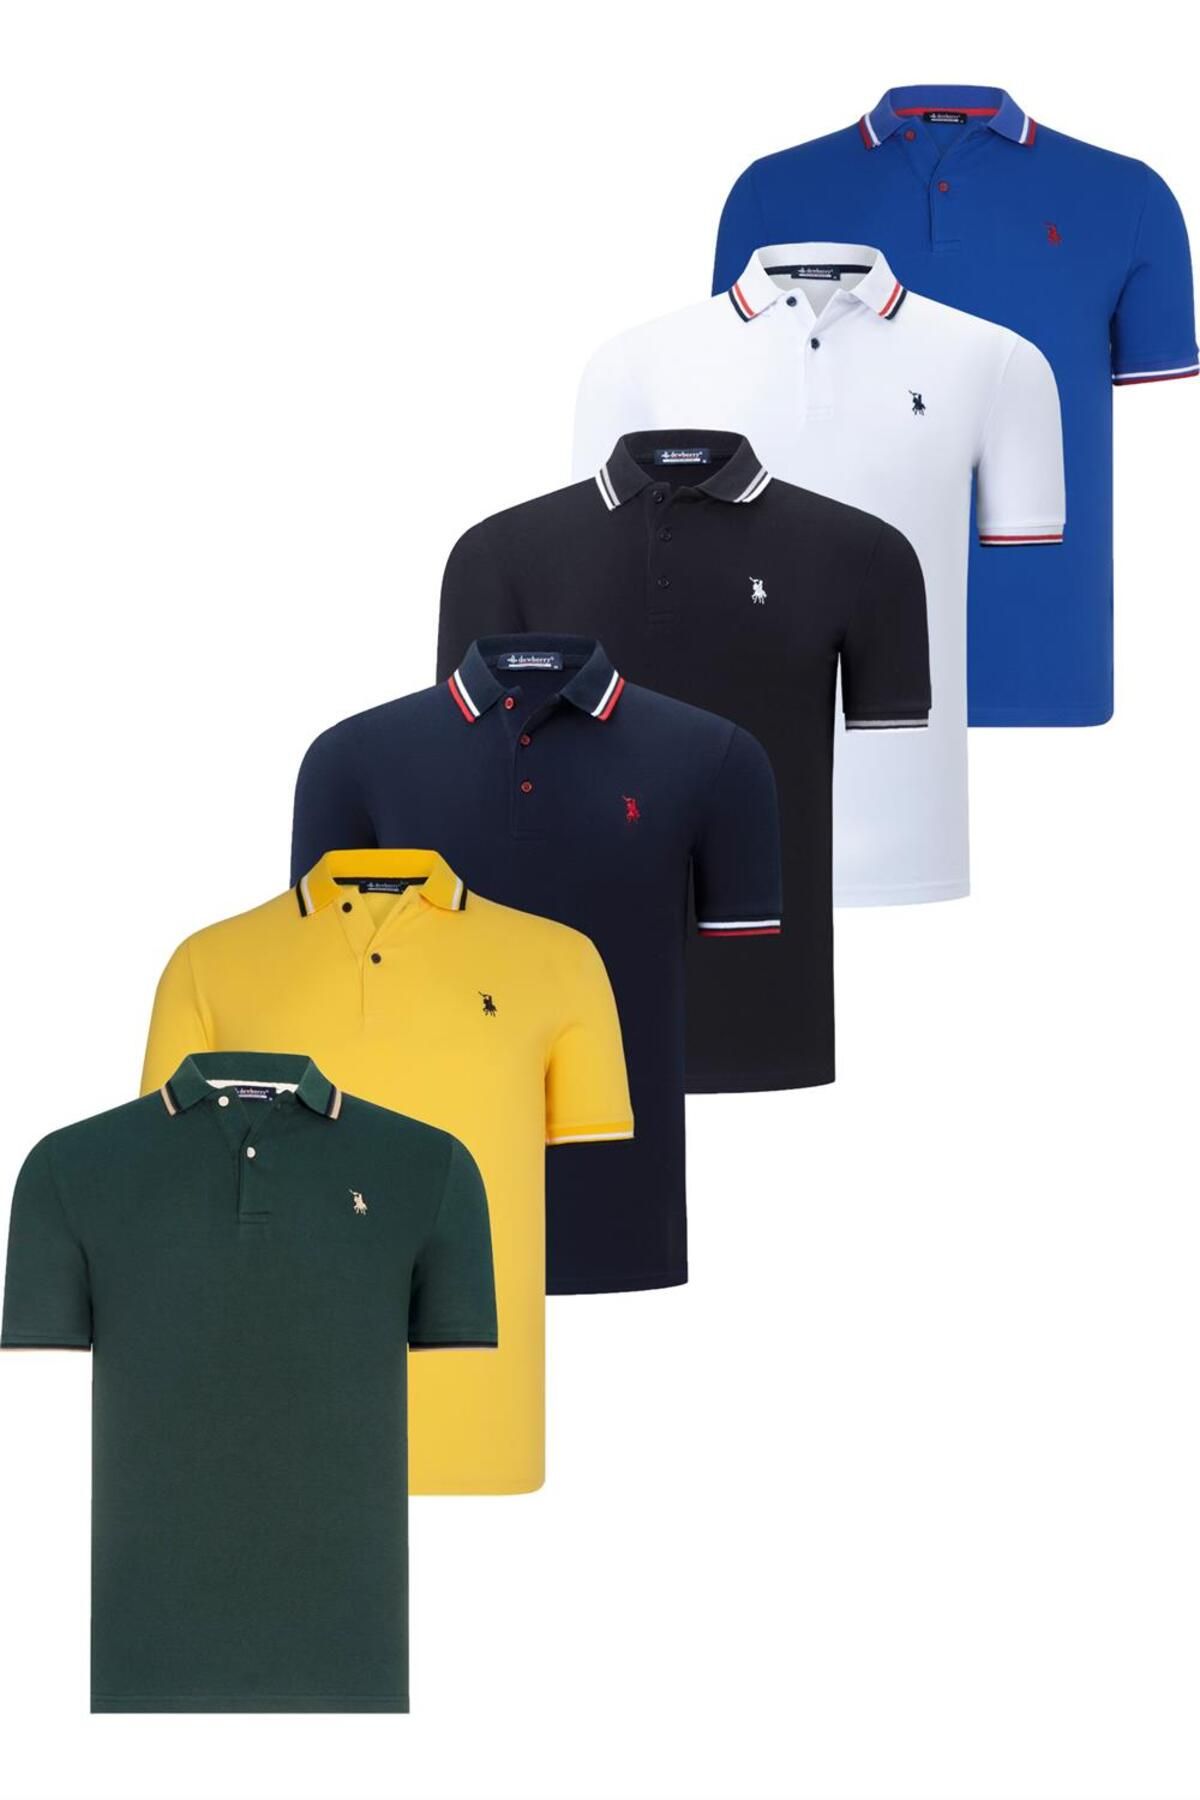 Dewberry ست شش عددی تی شرت مردانه T8594 DEWBERRY-مشکی-سفید-آبی تیره-زرد-SAX-نفتیت